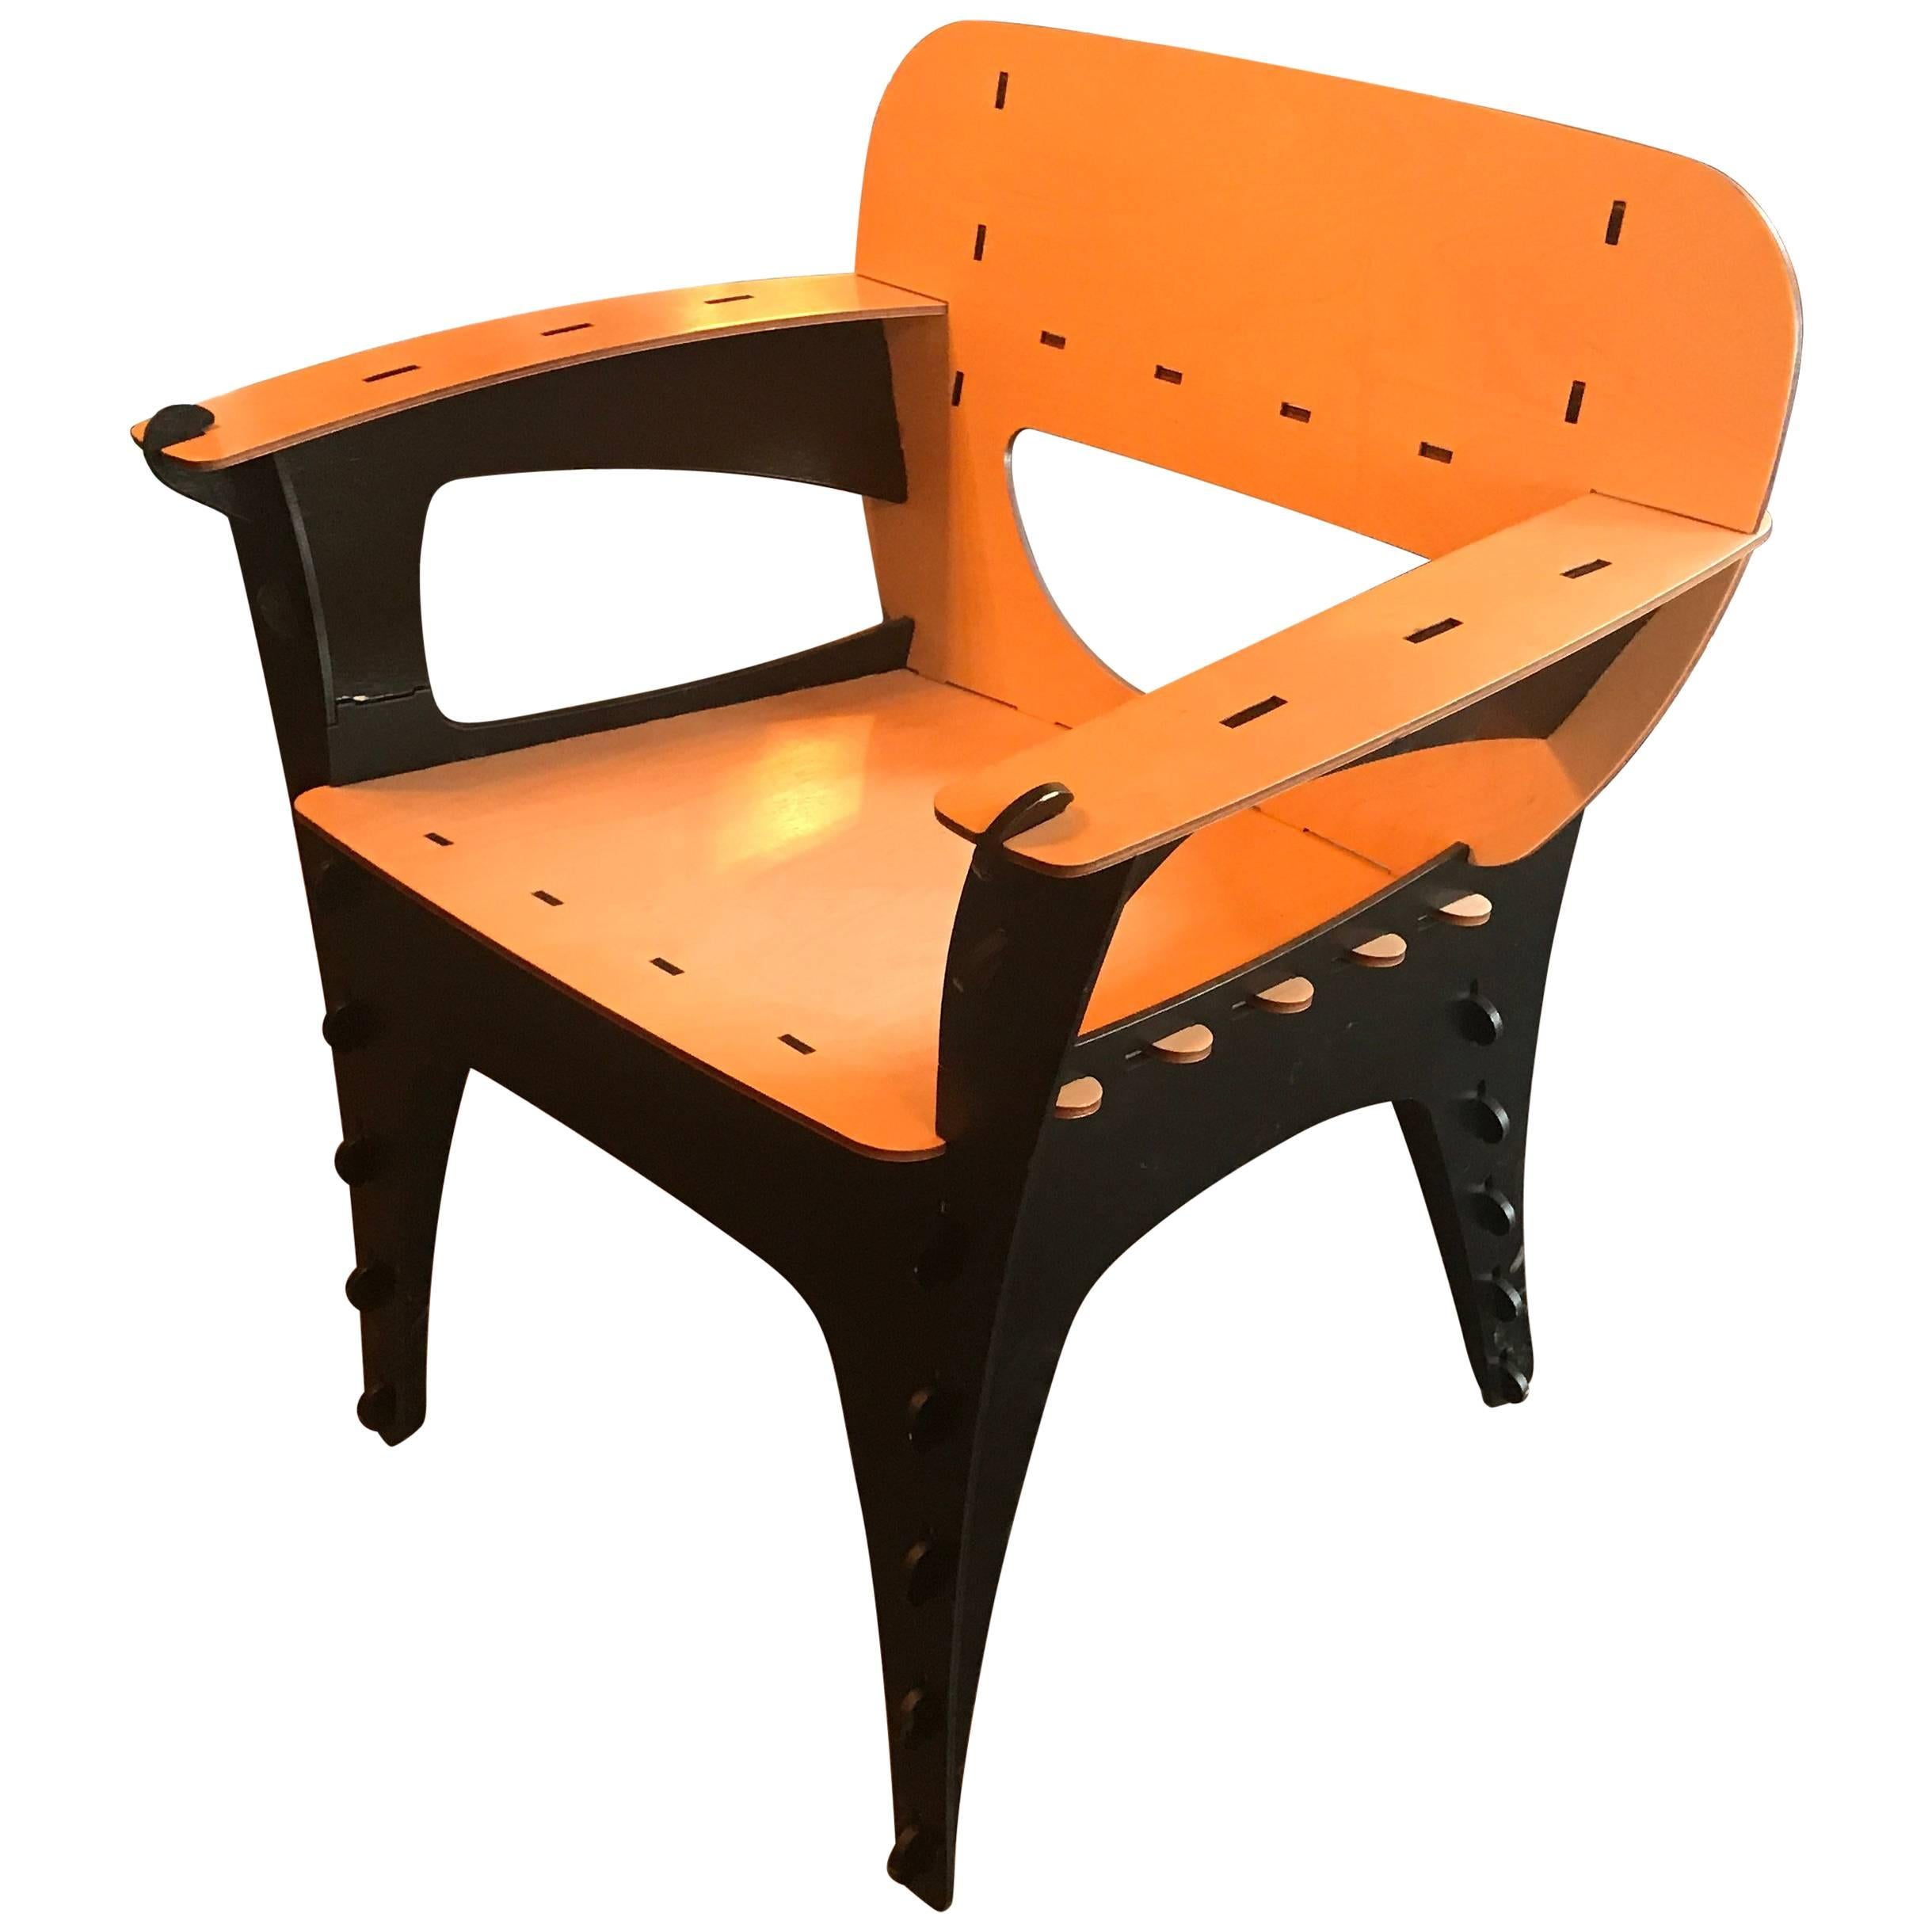 Very Unique Plywood Puzzle Chair by David Kawecki